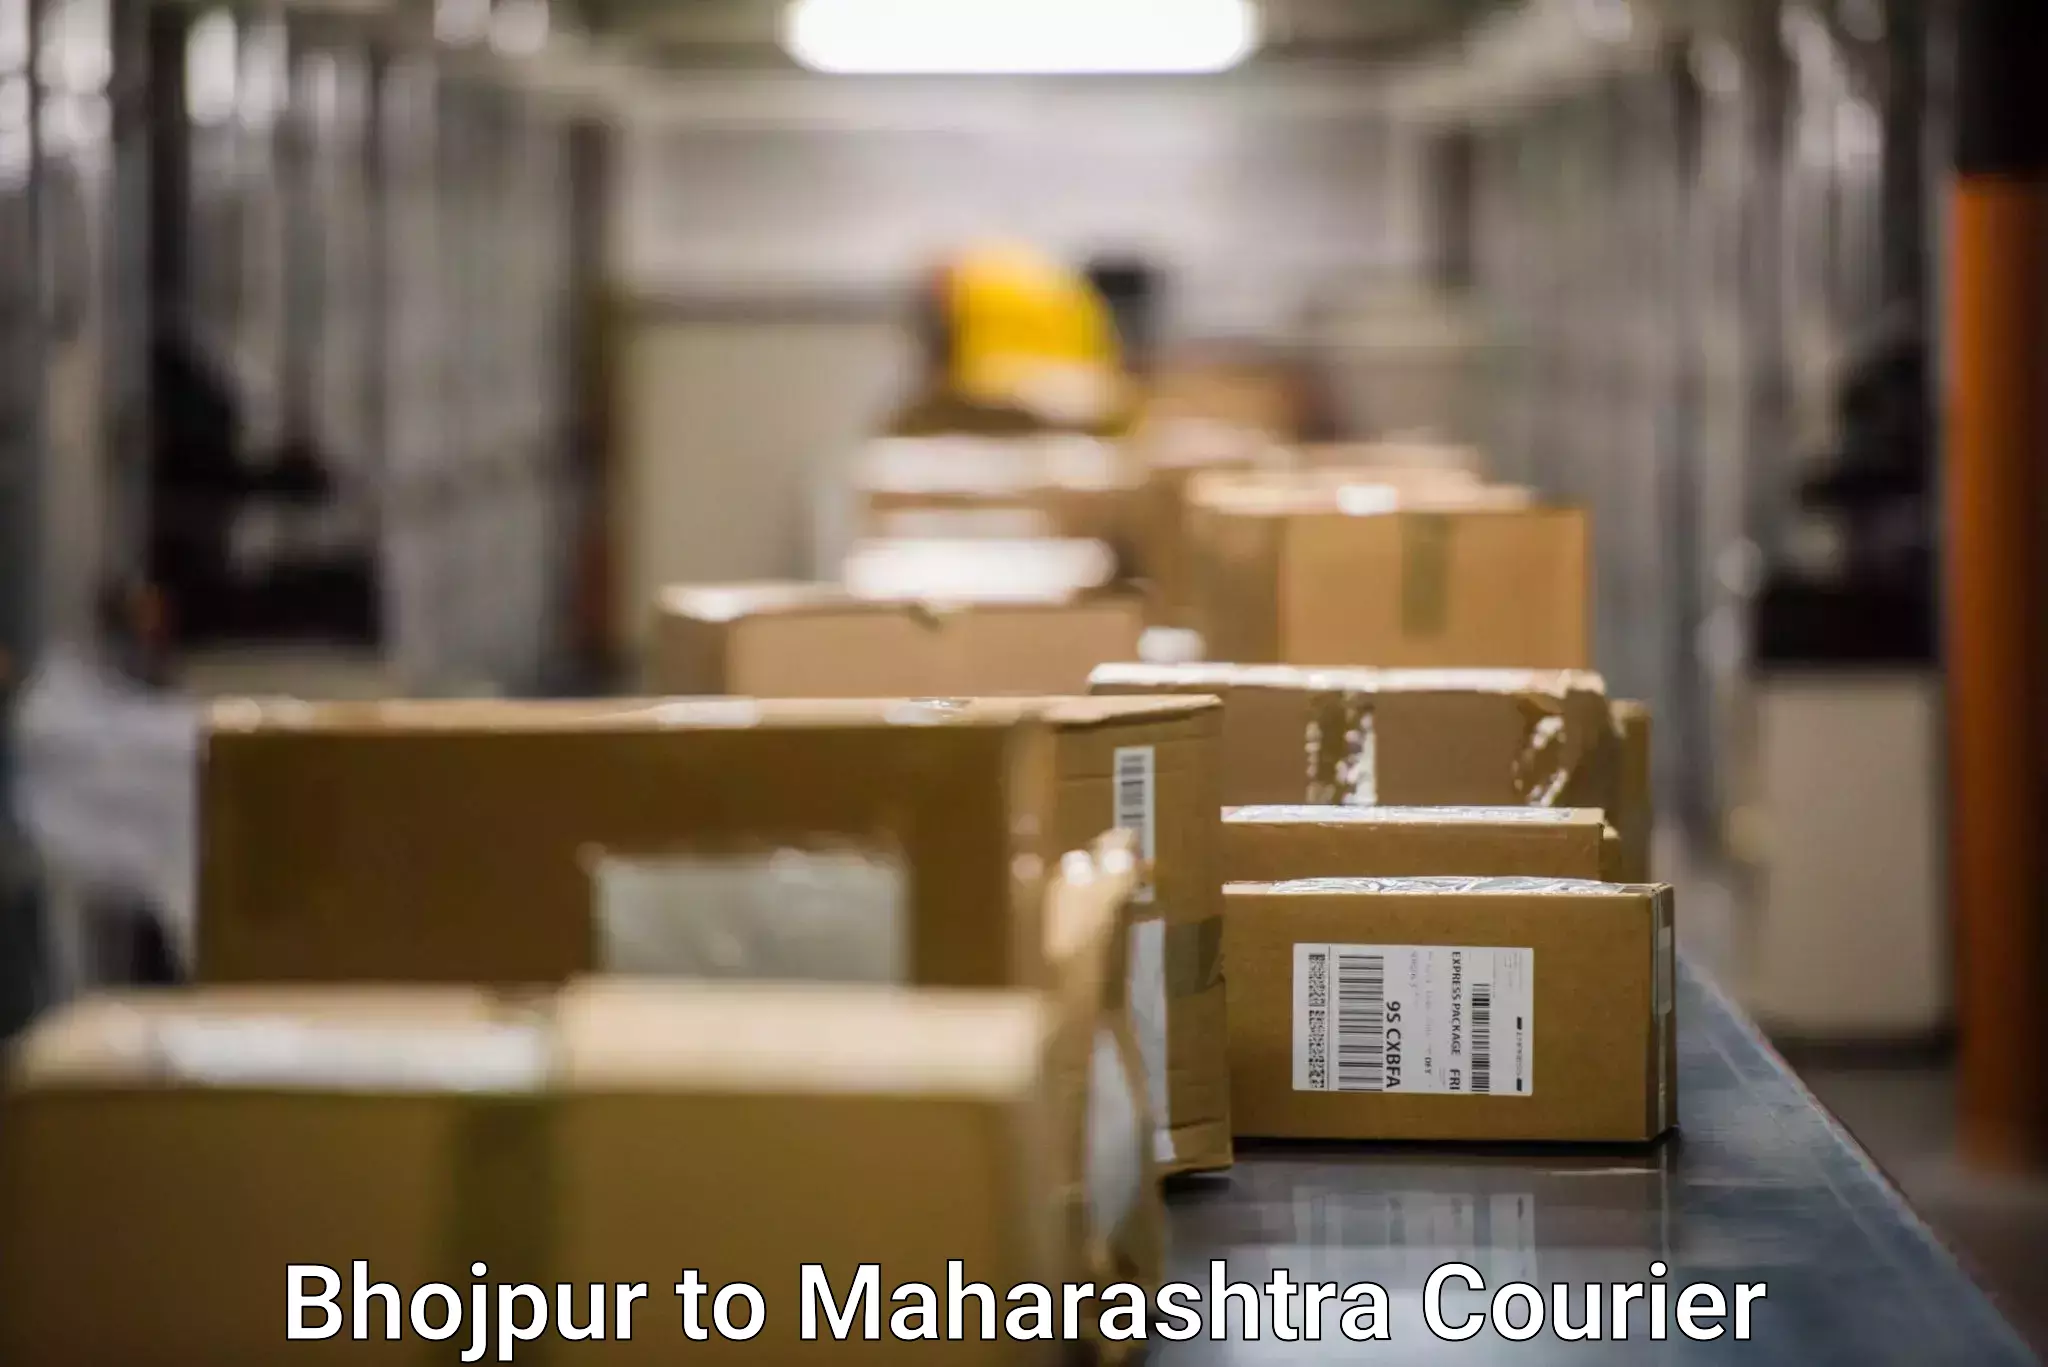 Courier service comparison Bhojpur to Vaijapur